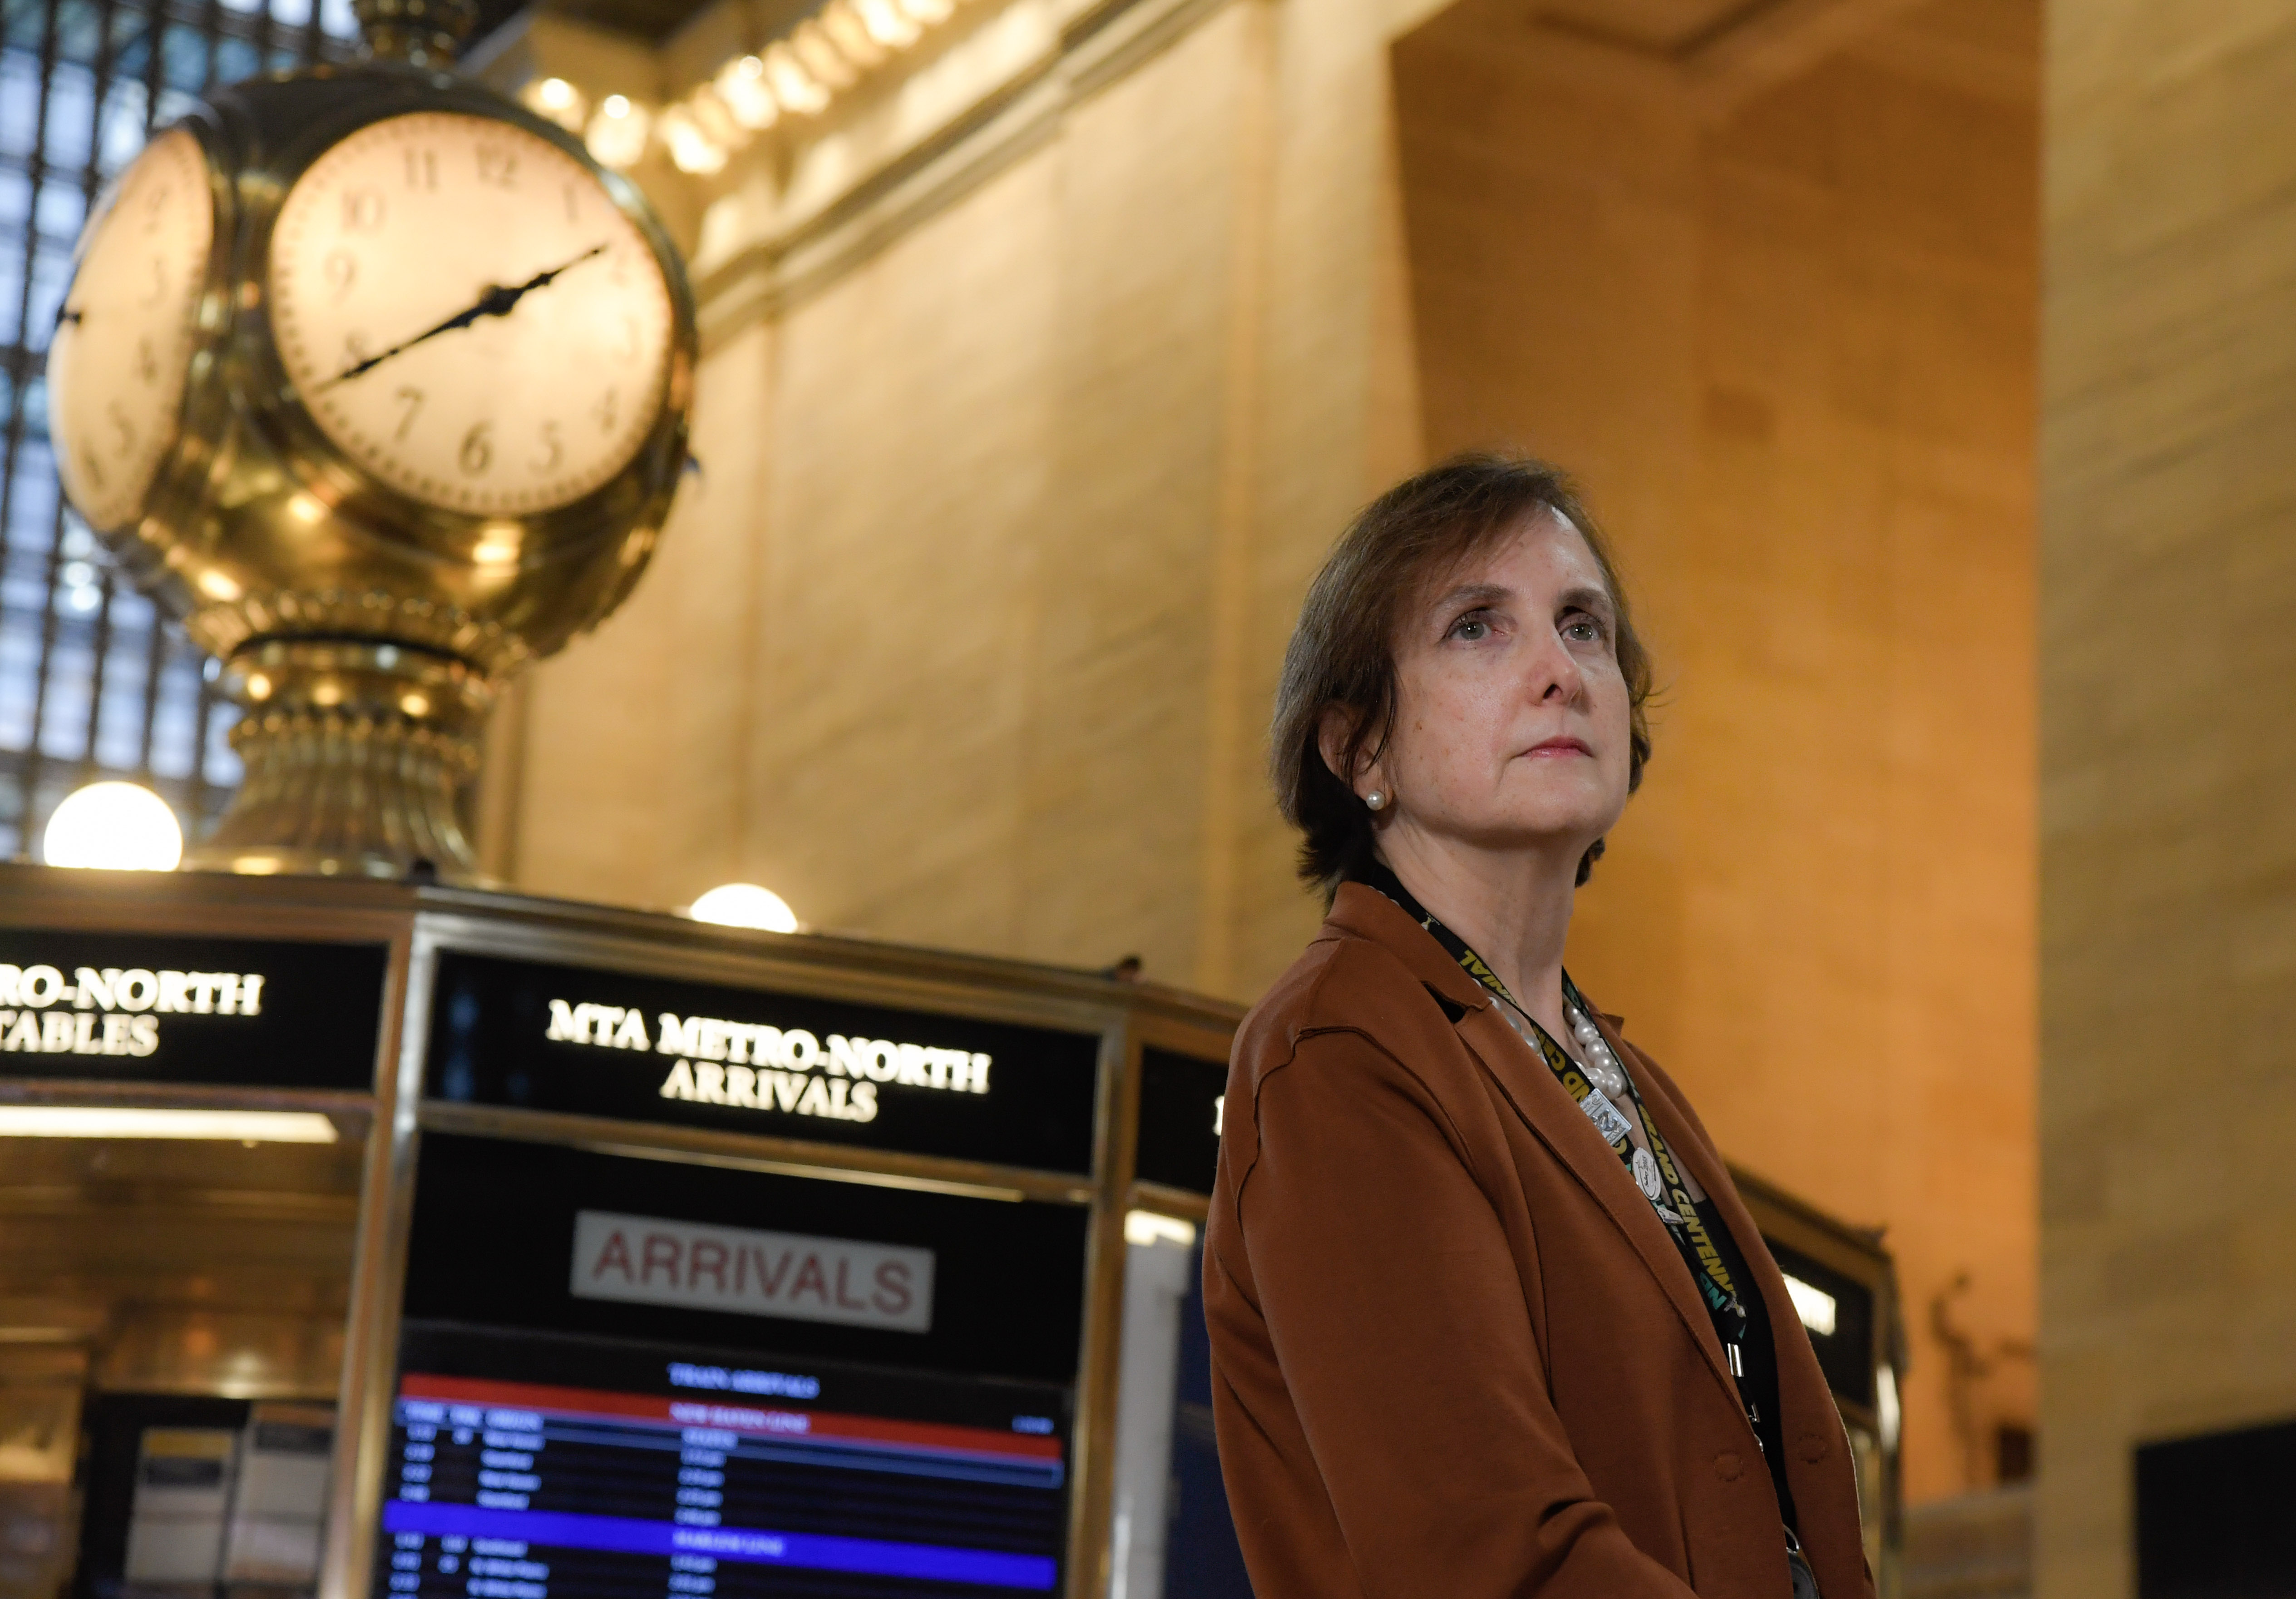 MTA Announces Catherine Rinaldi to Serve as Interim President of MTA Long Island Rail Road